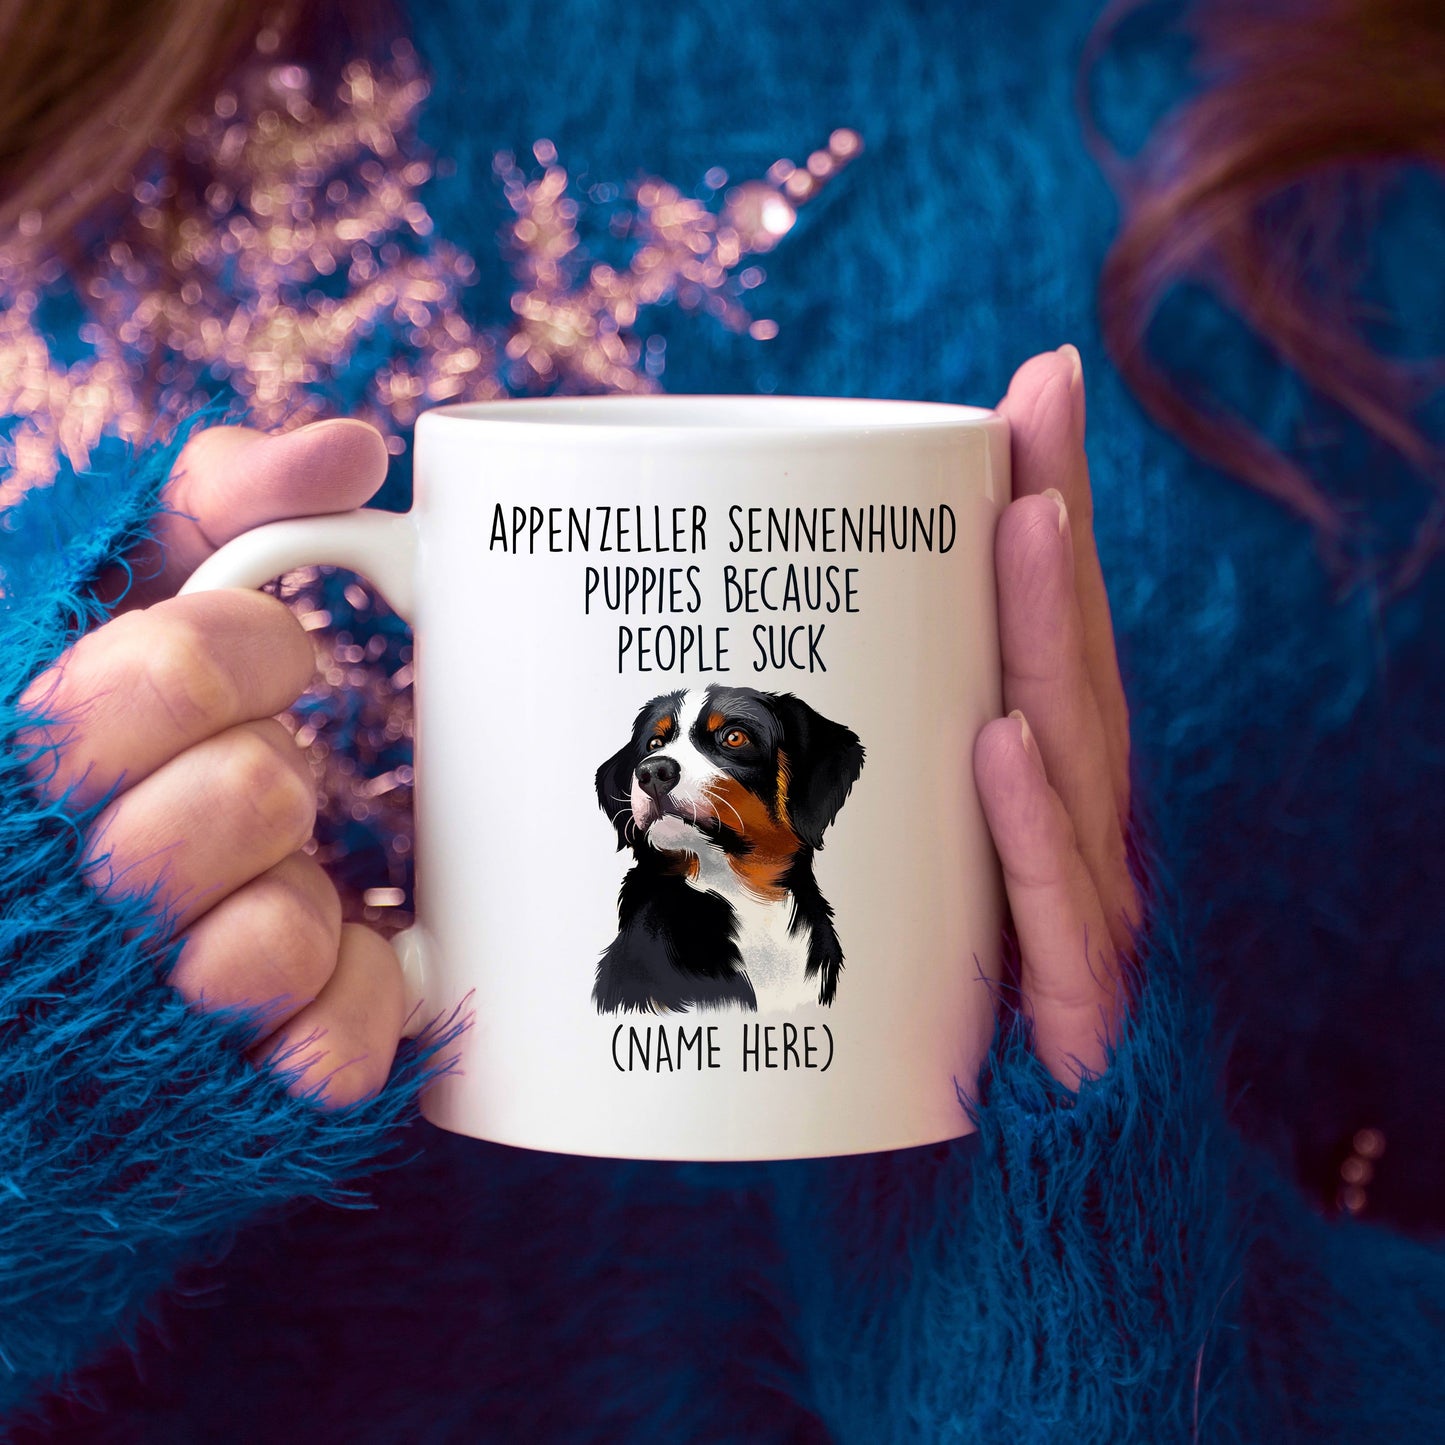 Appenzeller Sennenhund Puppies Because People Suck Funny Coffee Mug